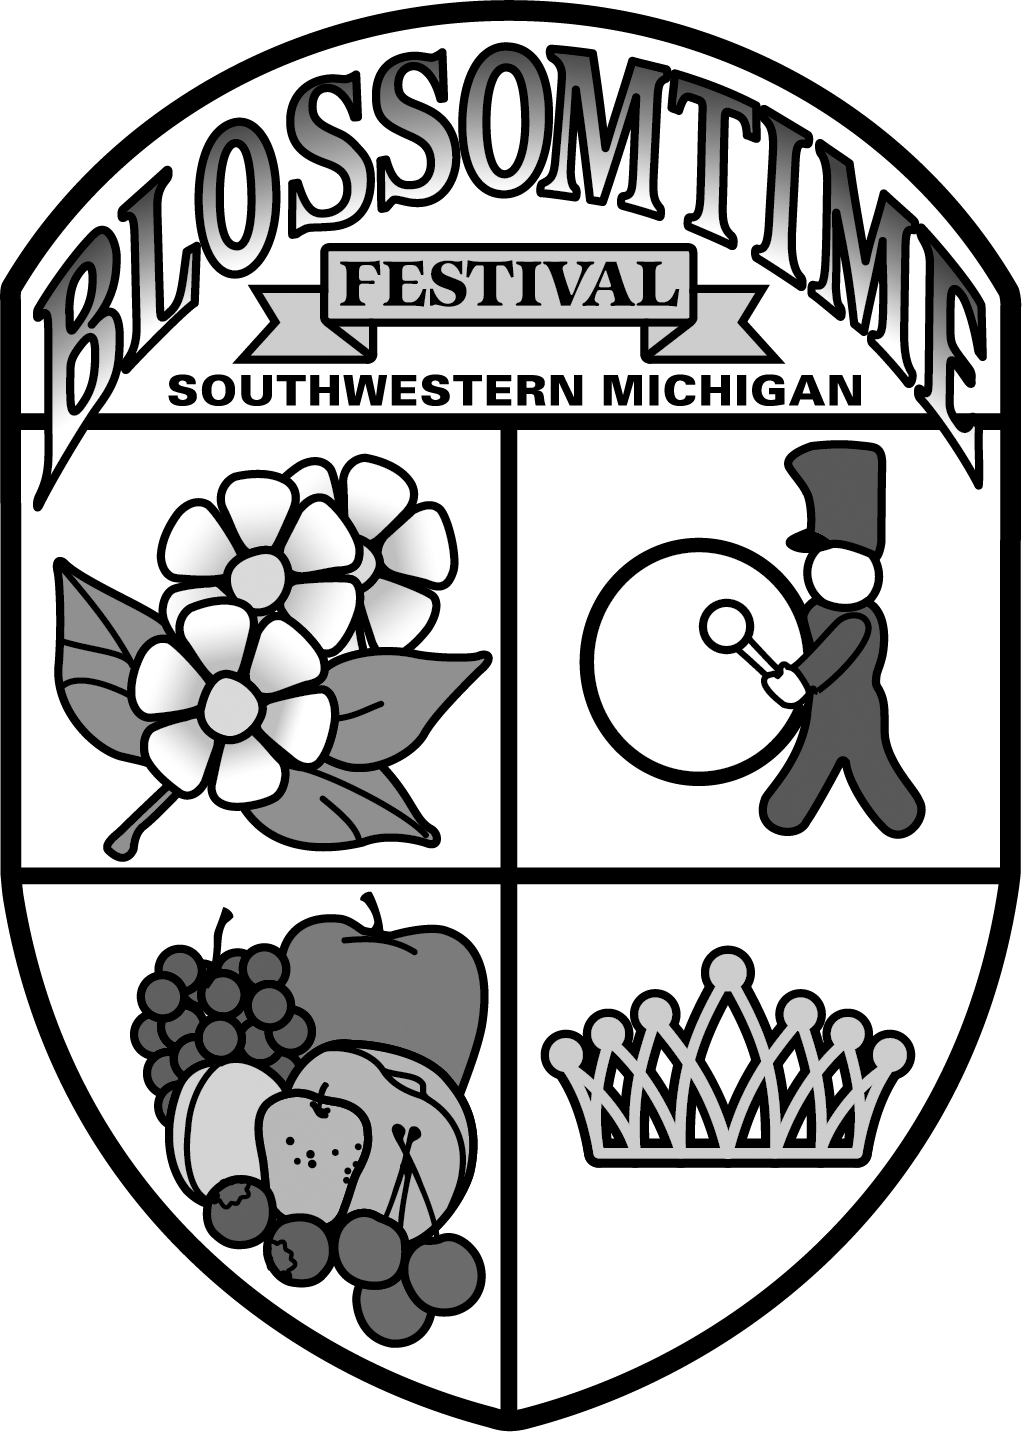 (c) Blossomtimefestival.org